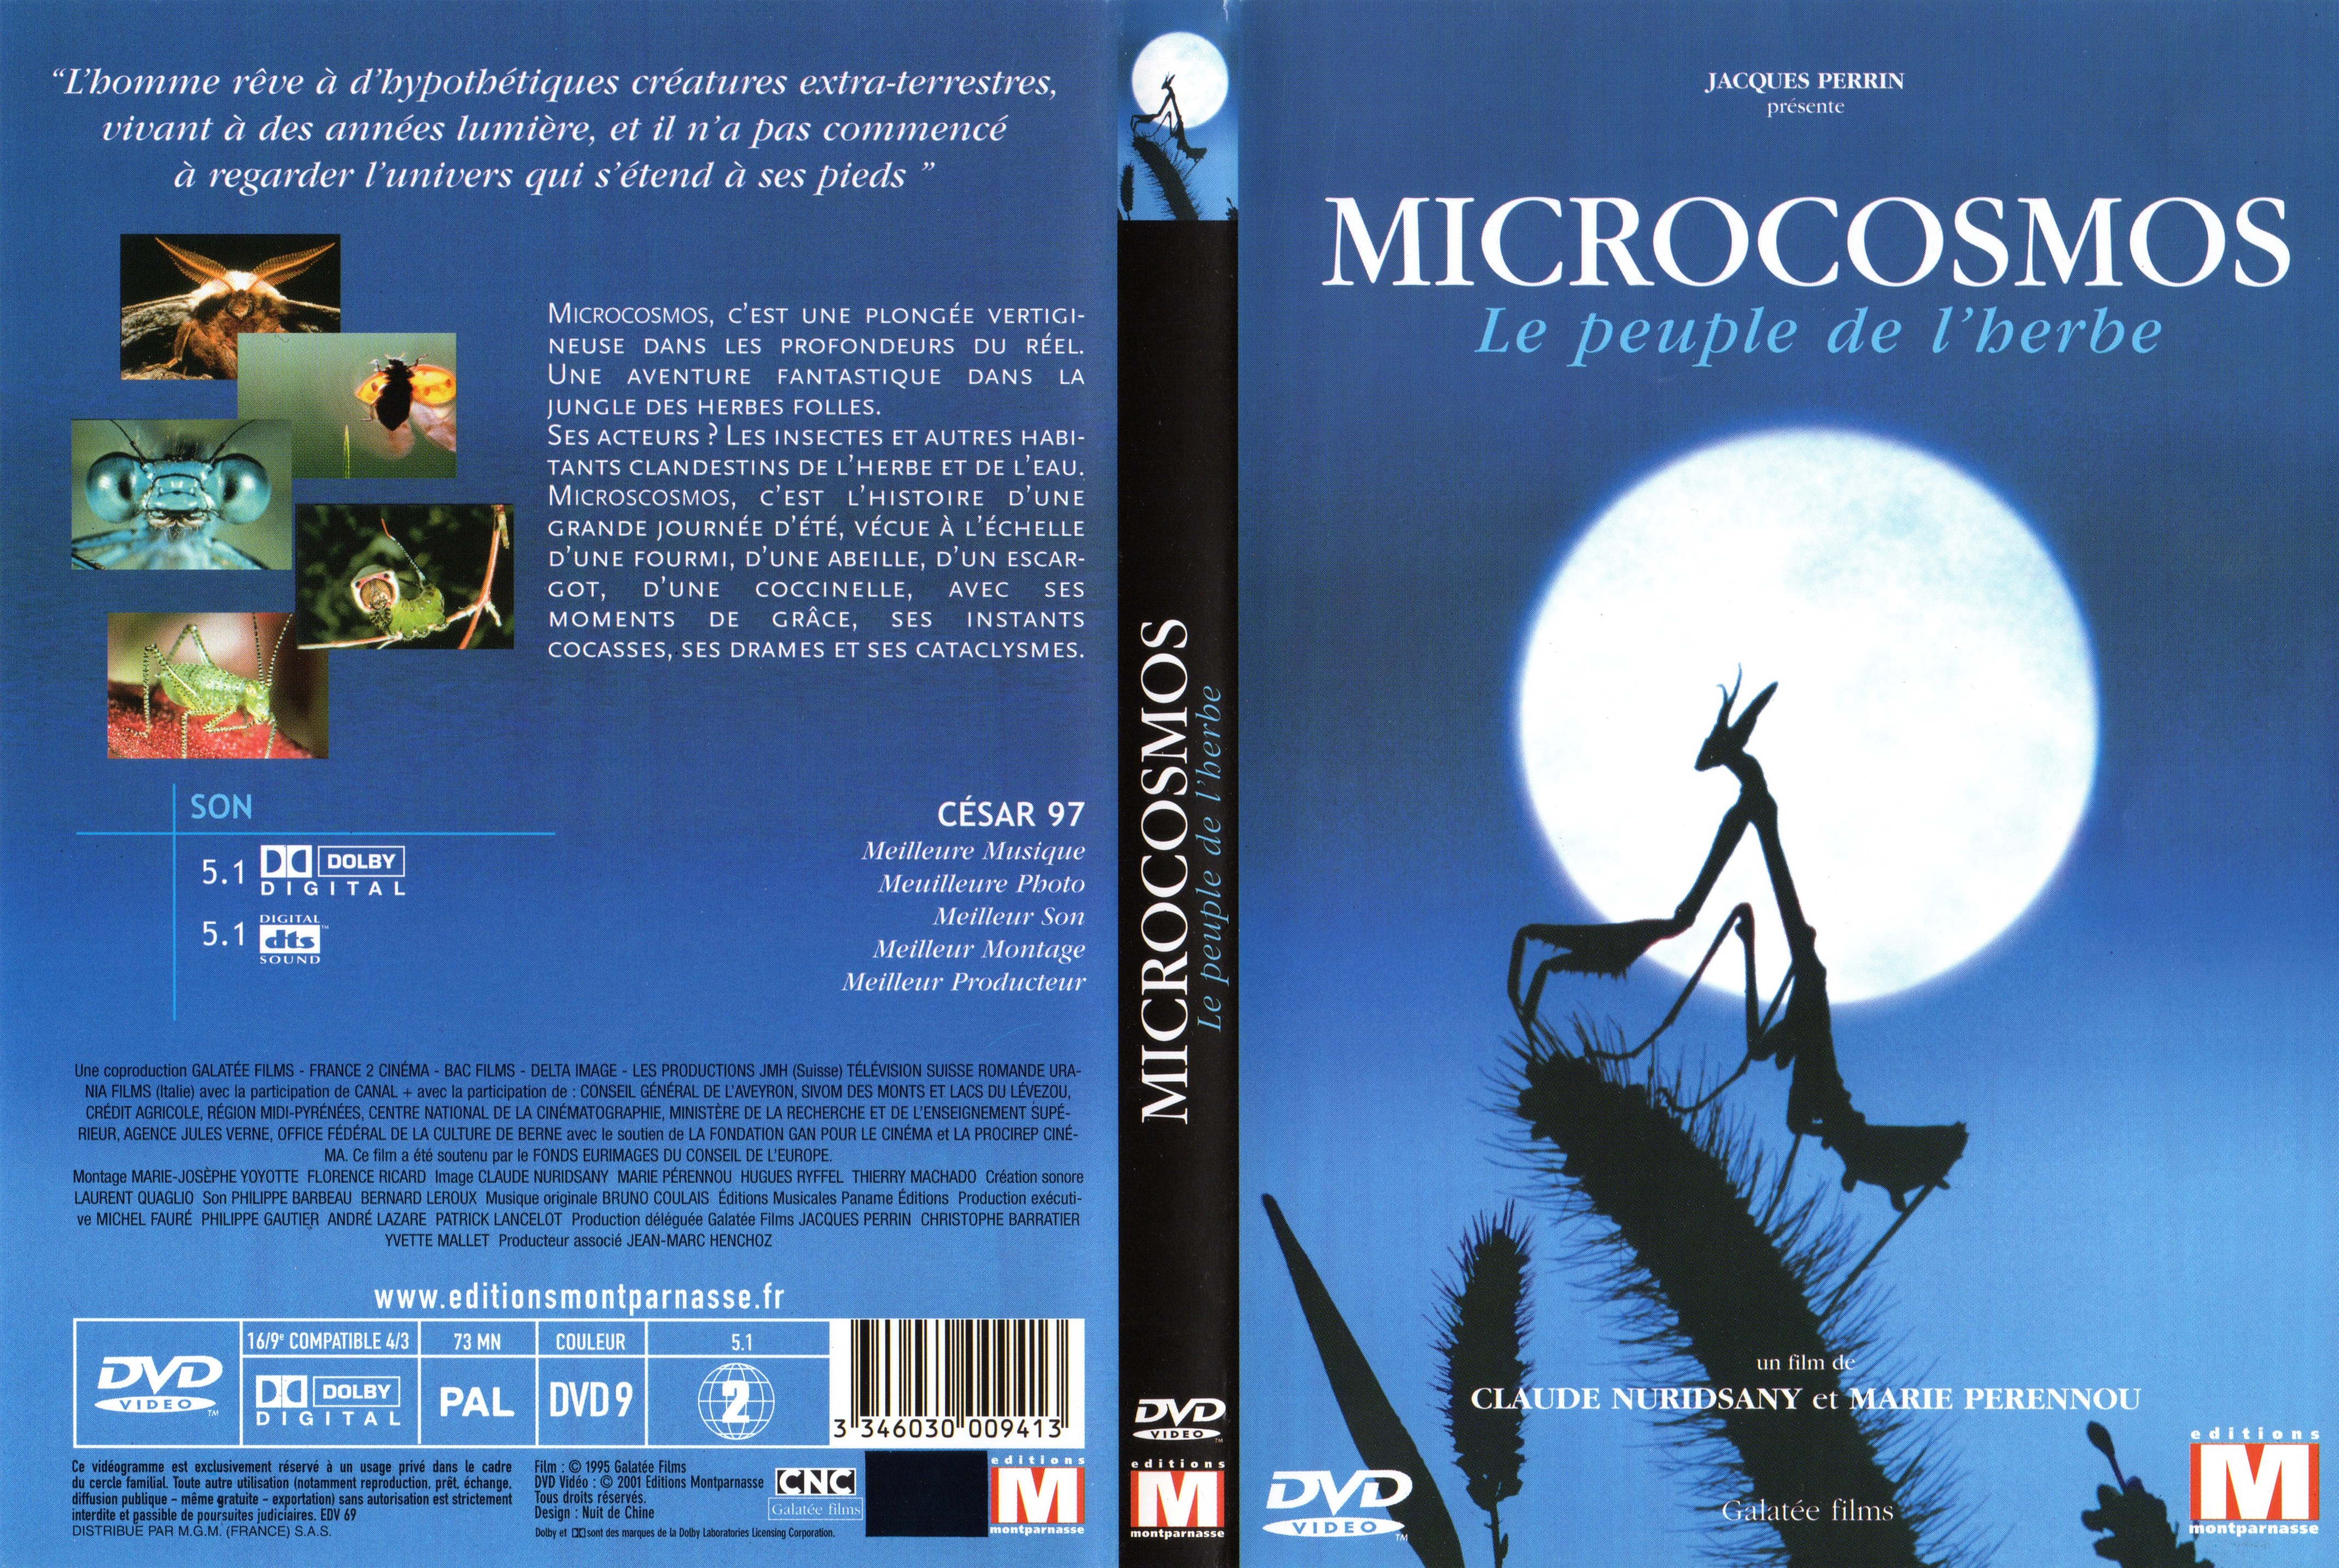 Jaquette DVD Microcosmos v3